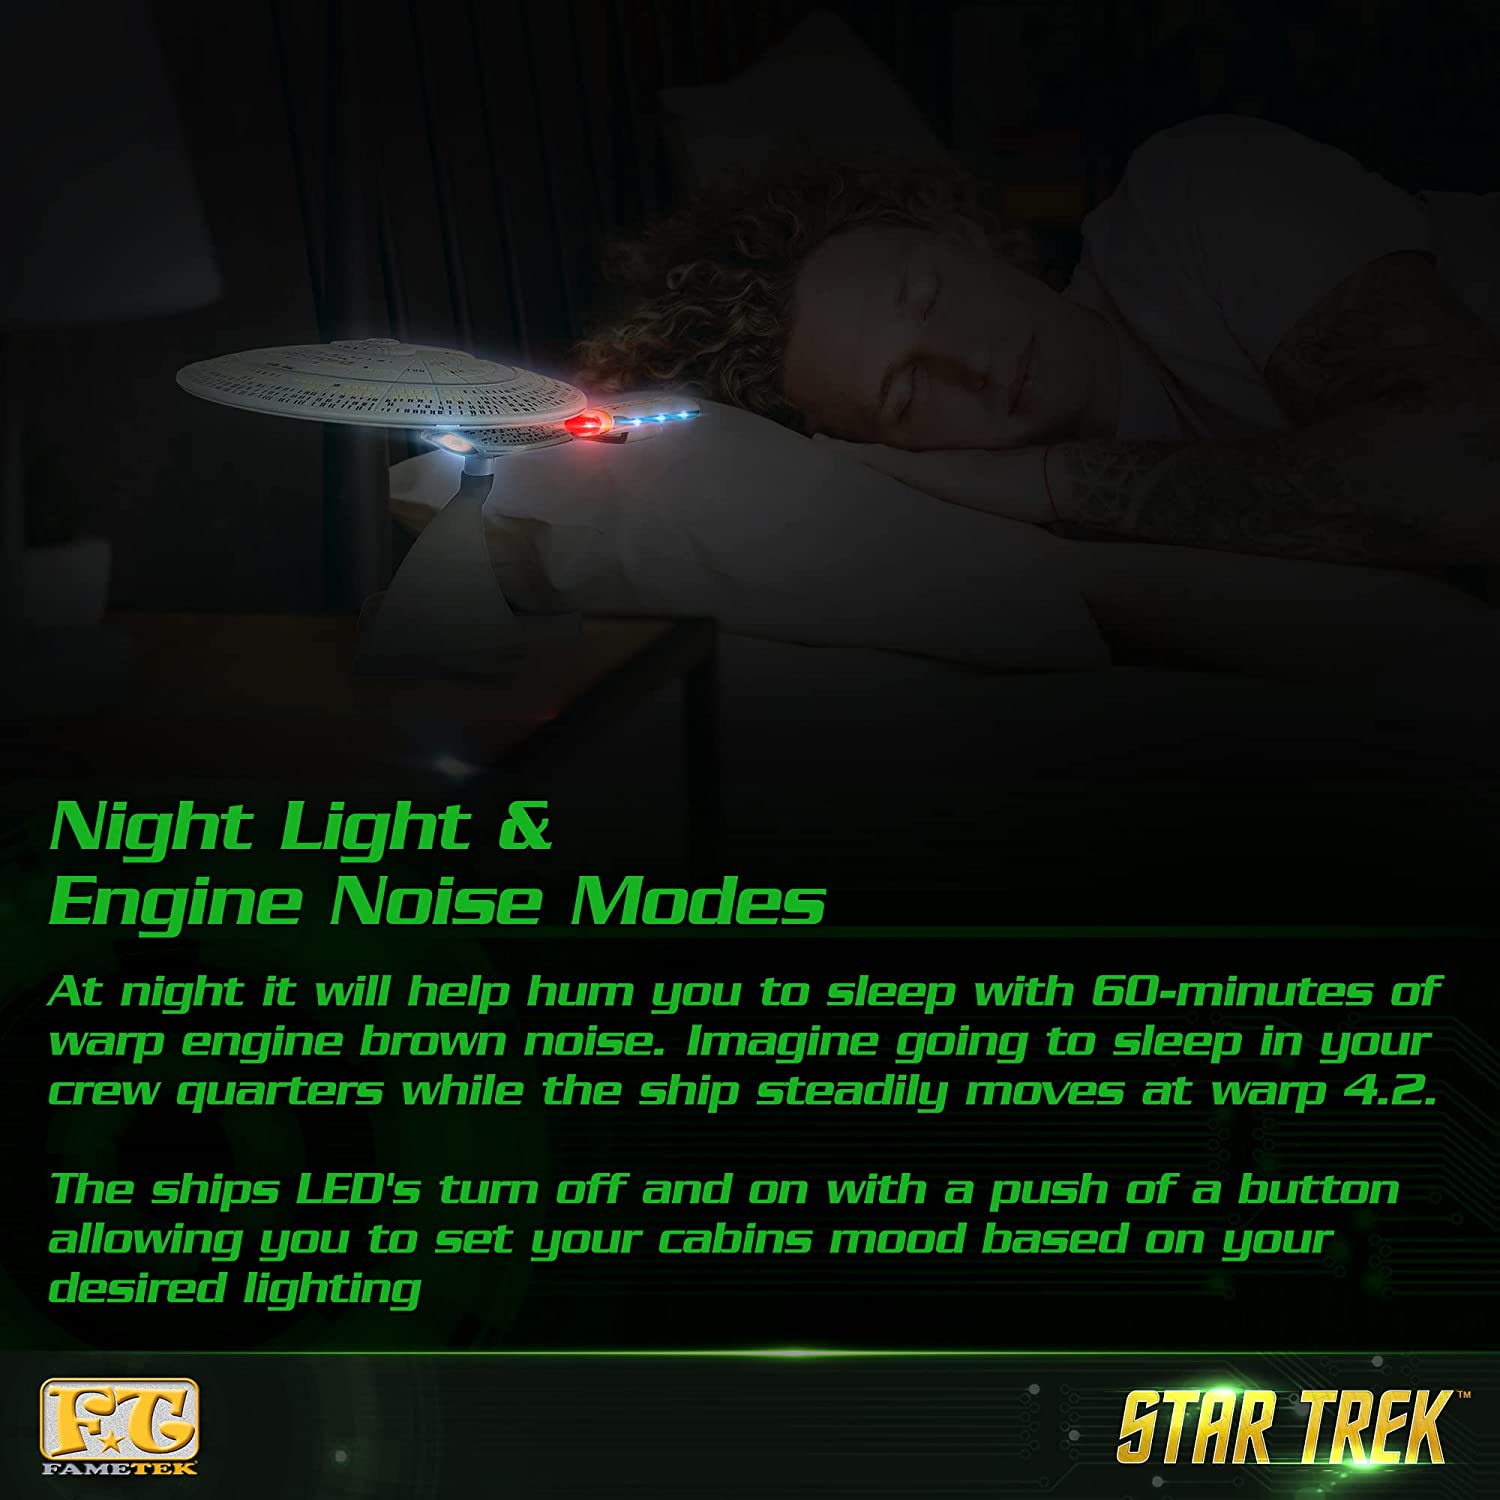 FAMETEK Star Trek Borg Cube Bluetooth Speaker with Green Illumination, Sound Effects & Borg Quotes